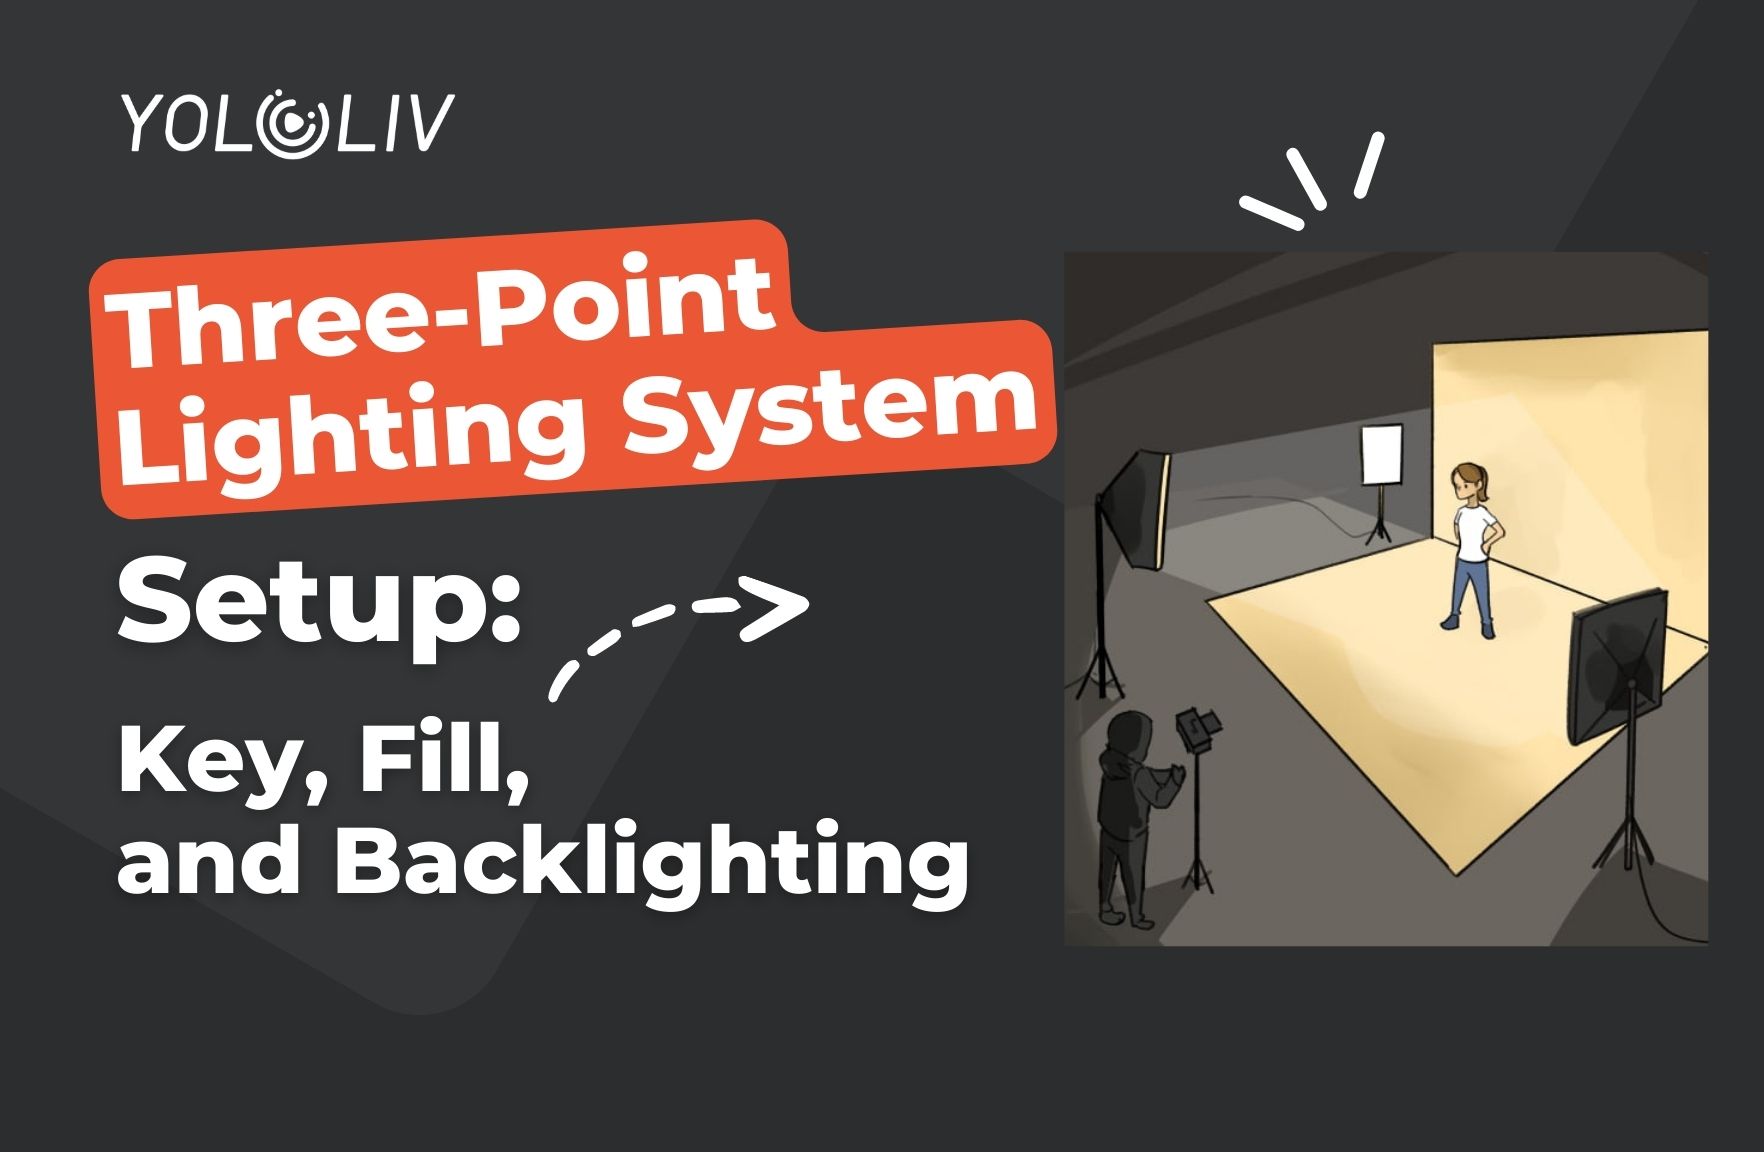 Three-Point Lighting System Setup: Key, Fill, and Backlighting